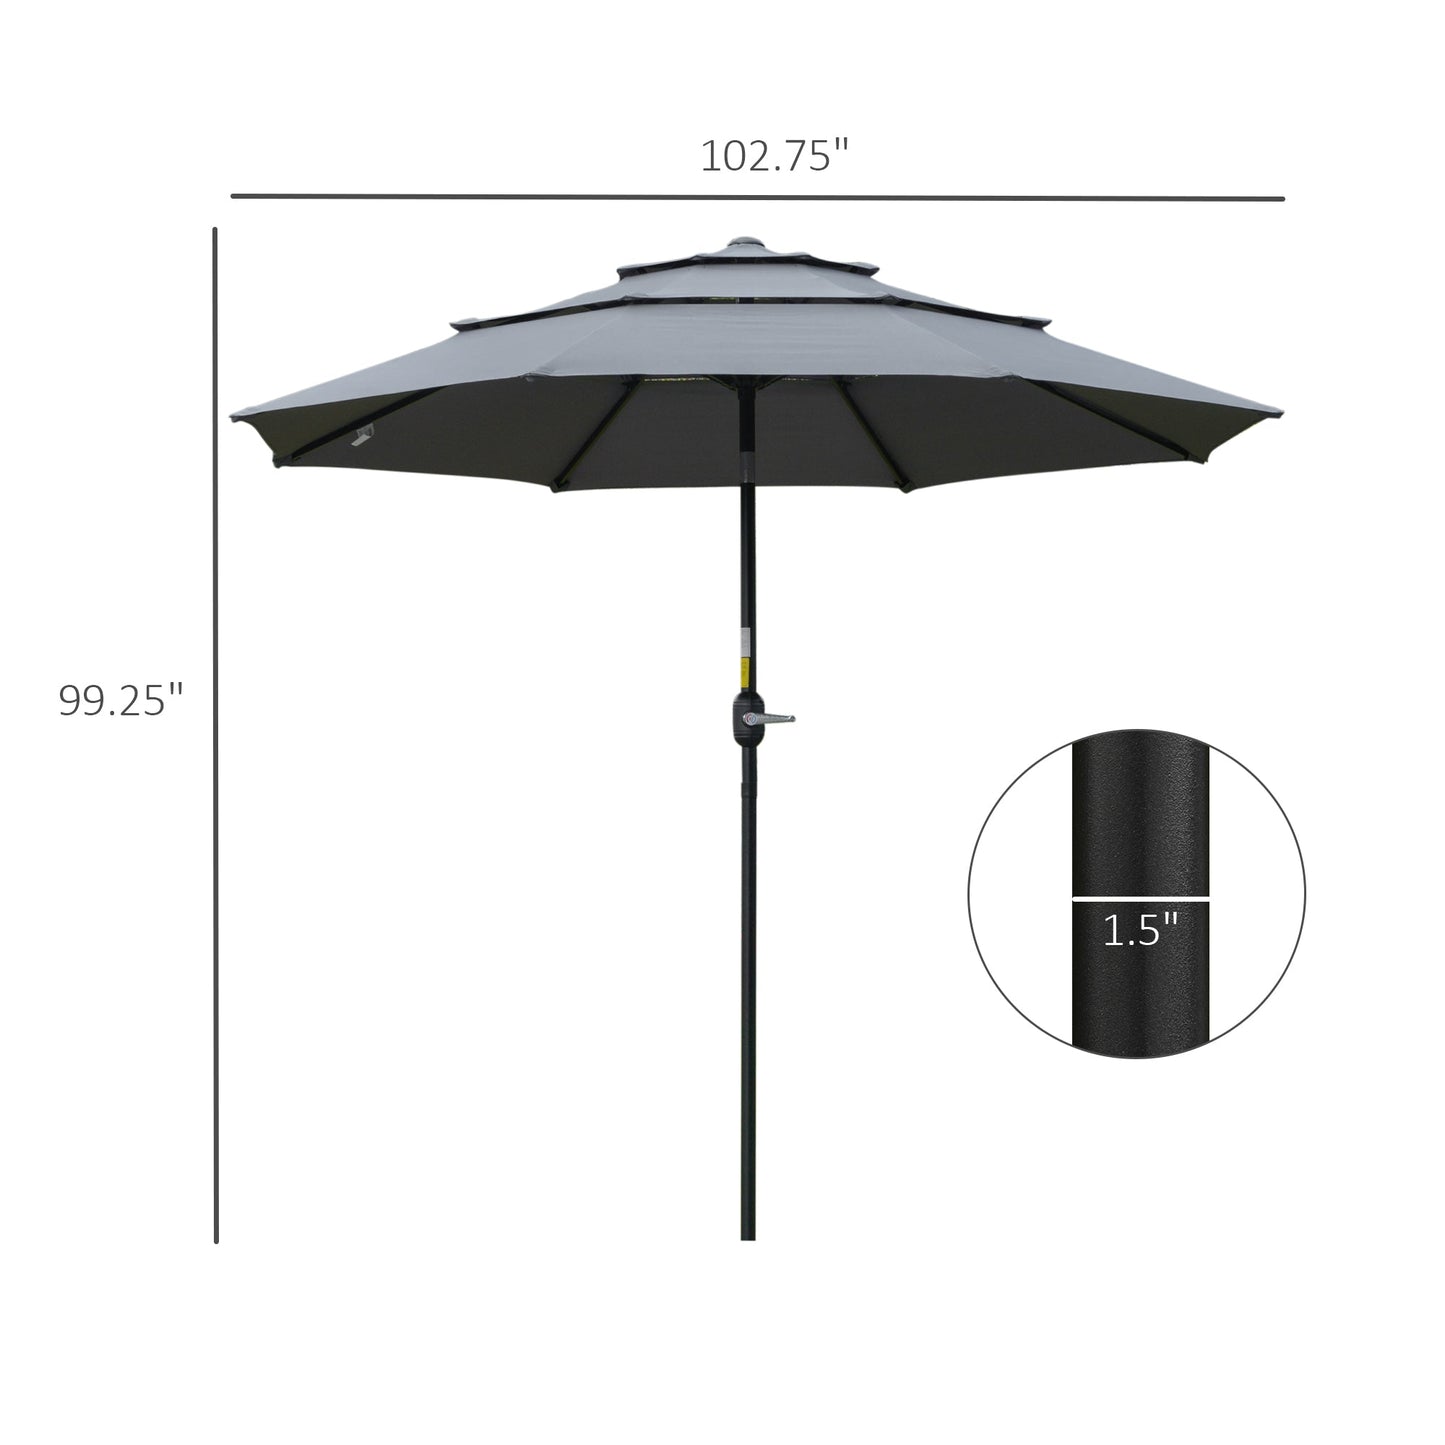 -Outsunny 9' 3-Tier Patio Umbrella, Outdoor Market Umbrella with Crank and Push Button Tilt for Deck, Backyard and Lawn, Dark Grey - Outdoor Style Company